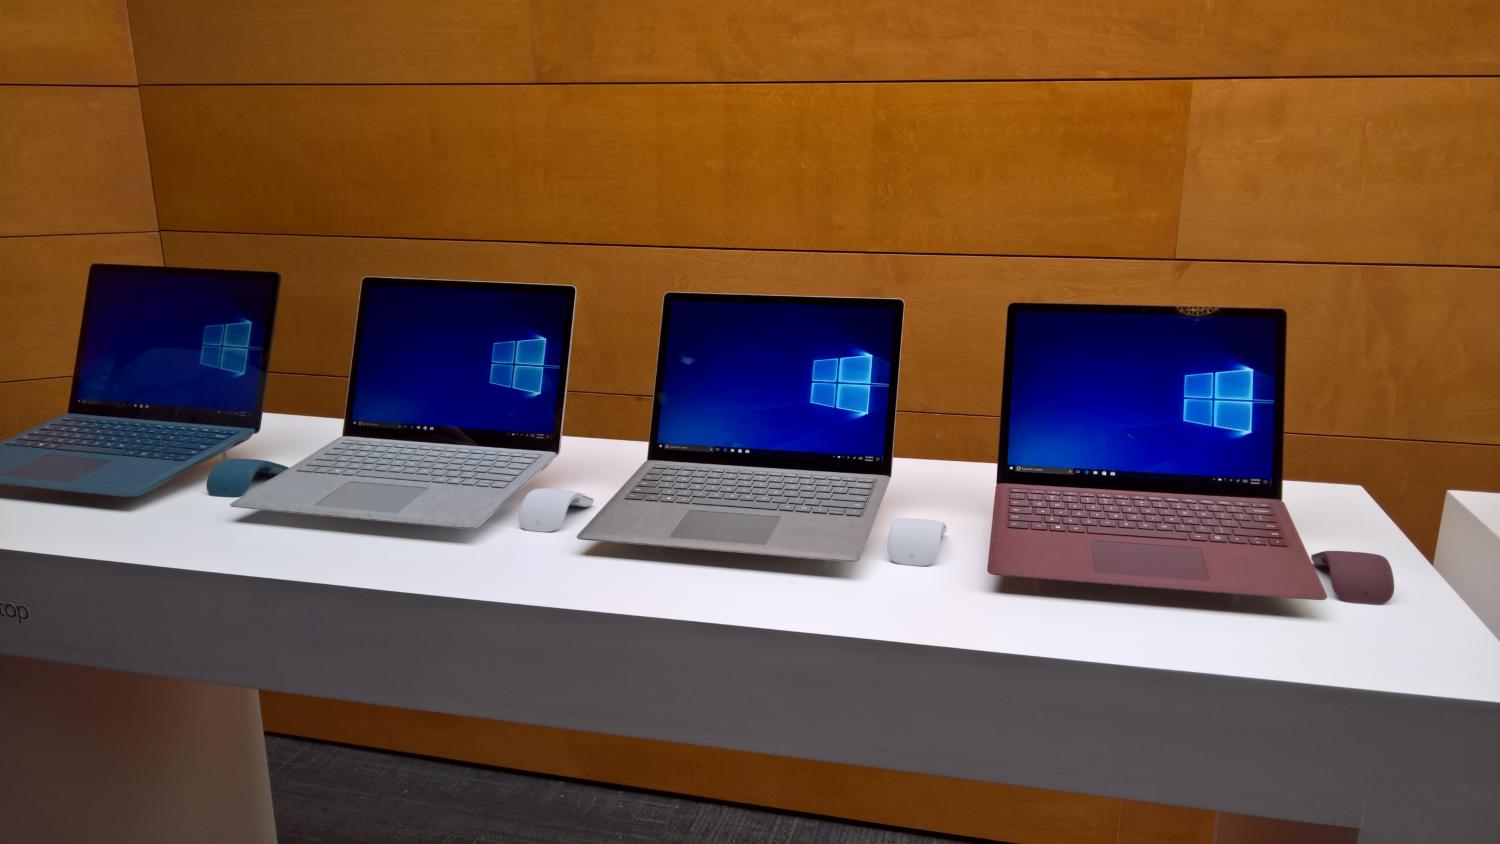 Windows 10 S, the Future of Educational Computing